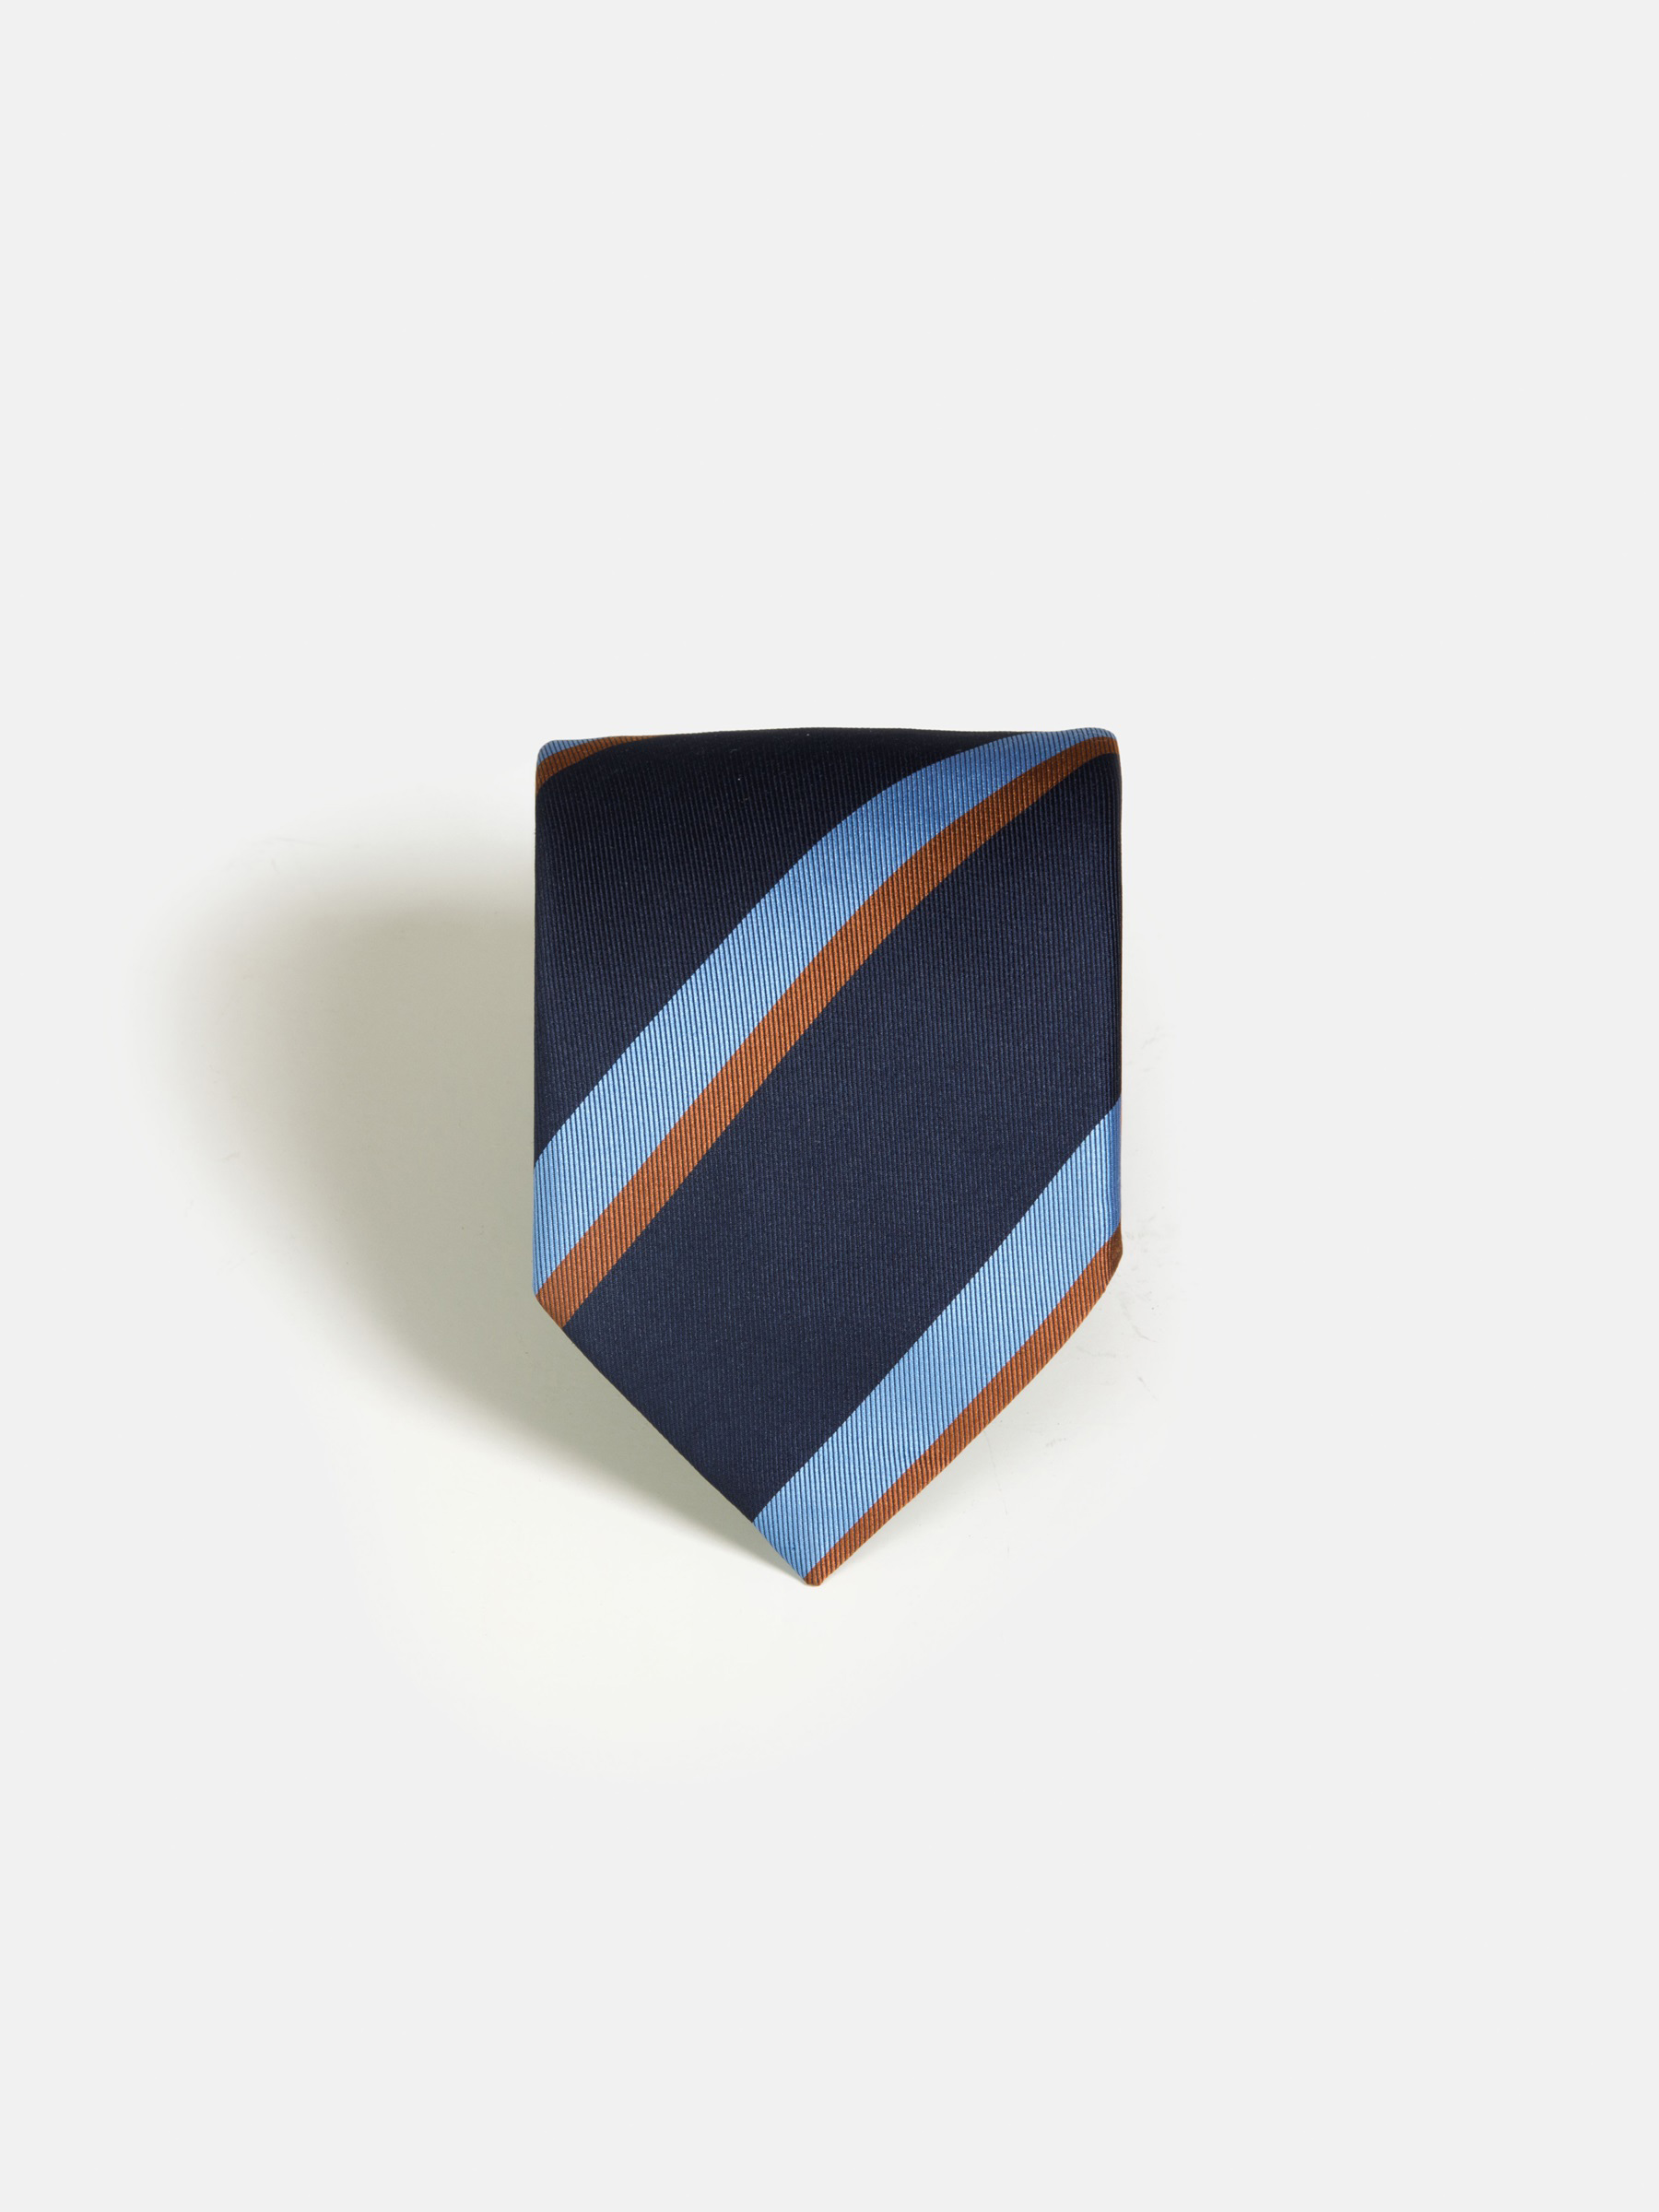 William Powell Black Grey Tie